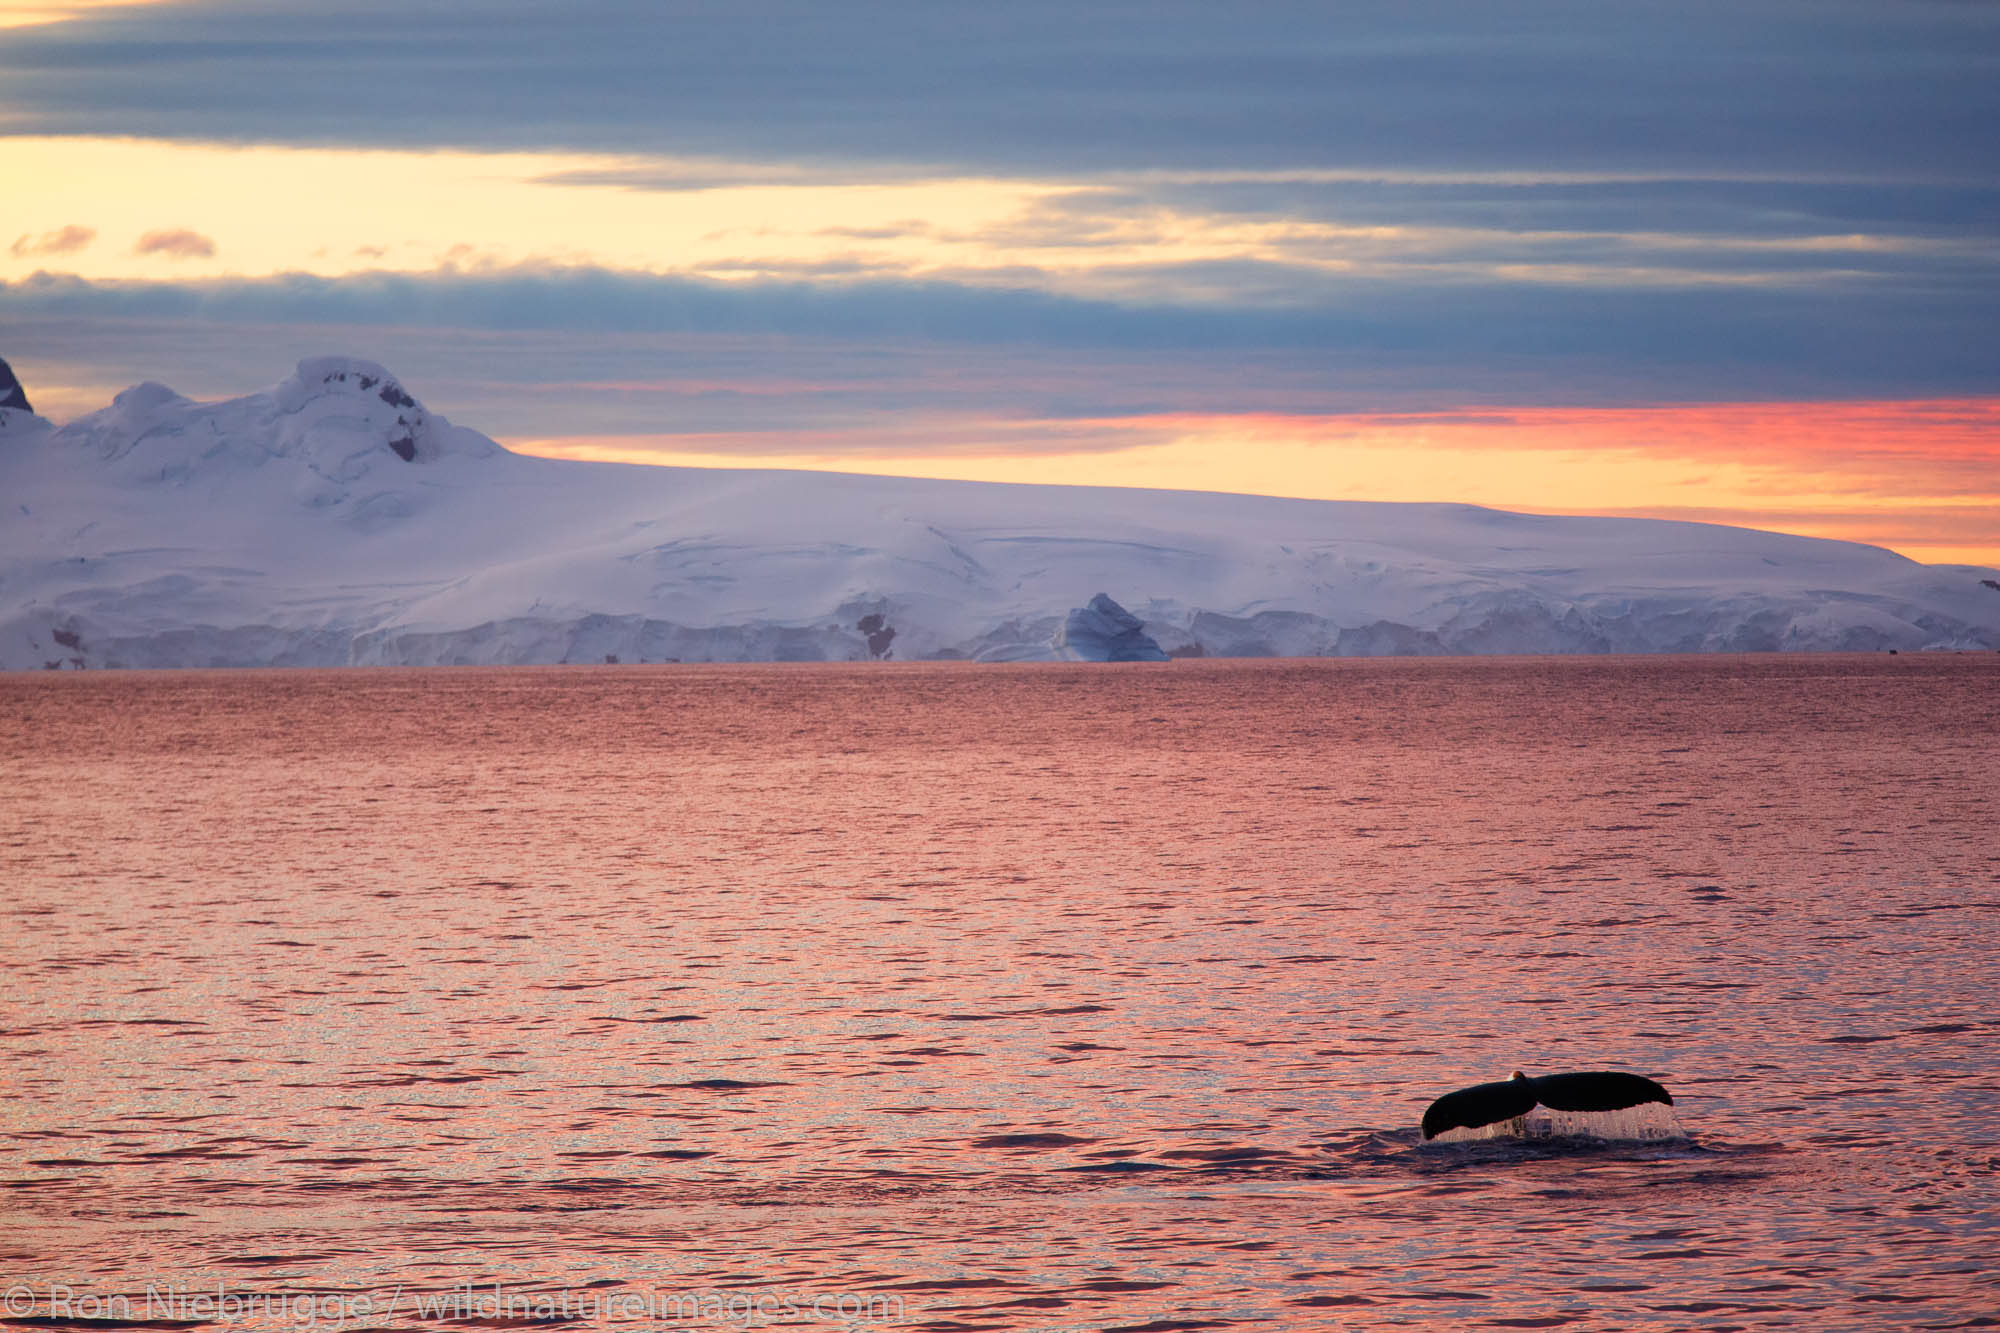 Humpback whale (Megaptera novaeangliae) at sunset / sunrise as we travel below the Antarctic Circle, Antarctica.